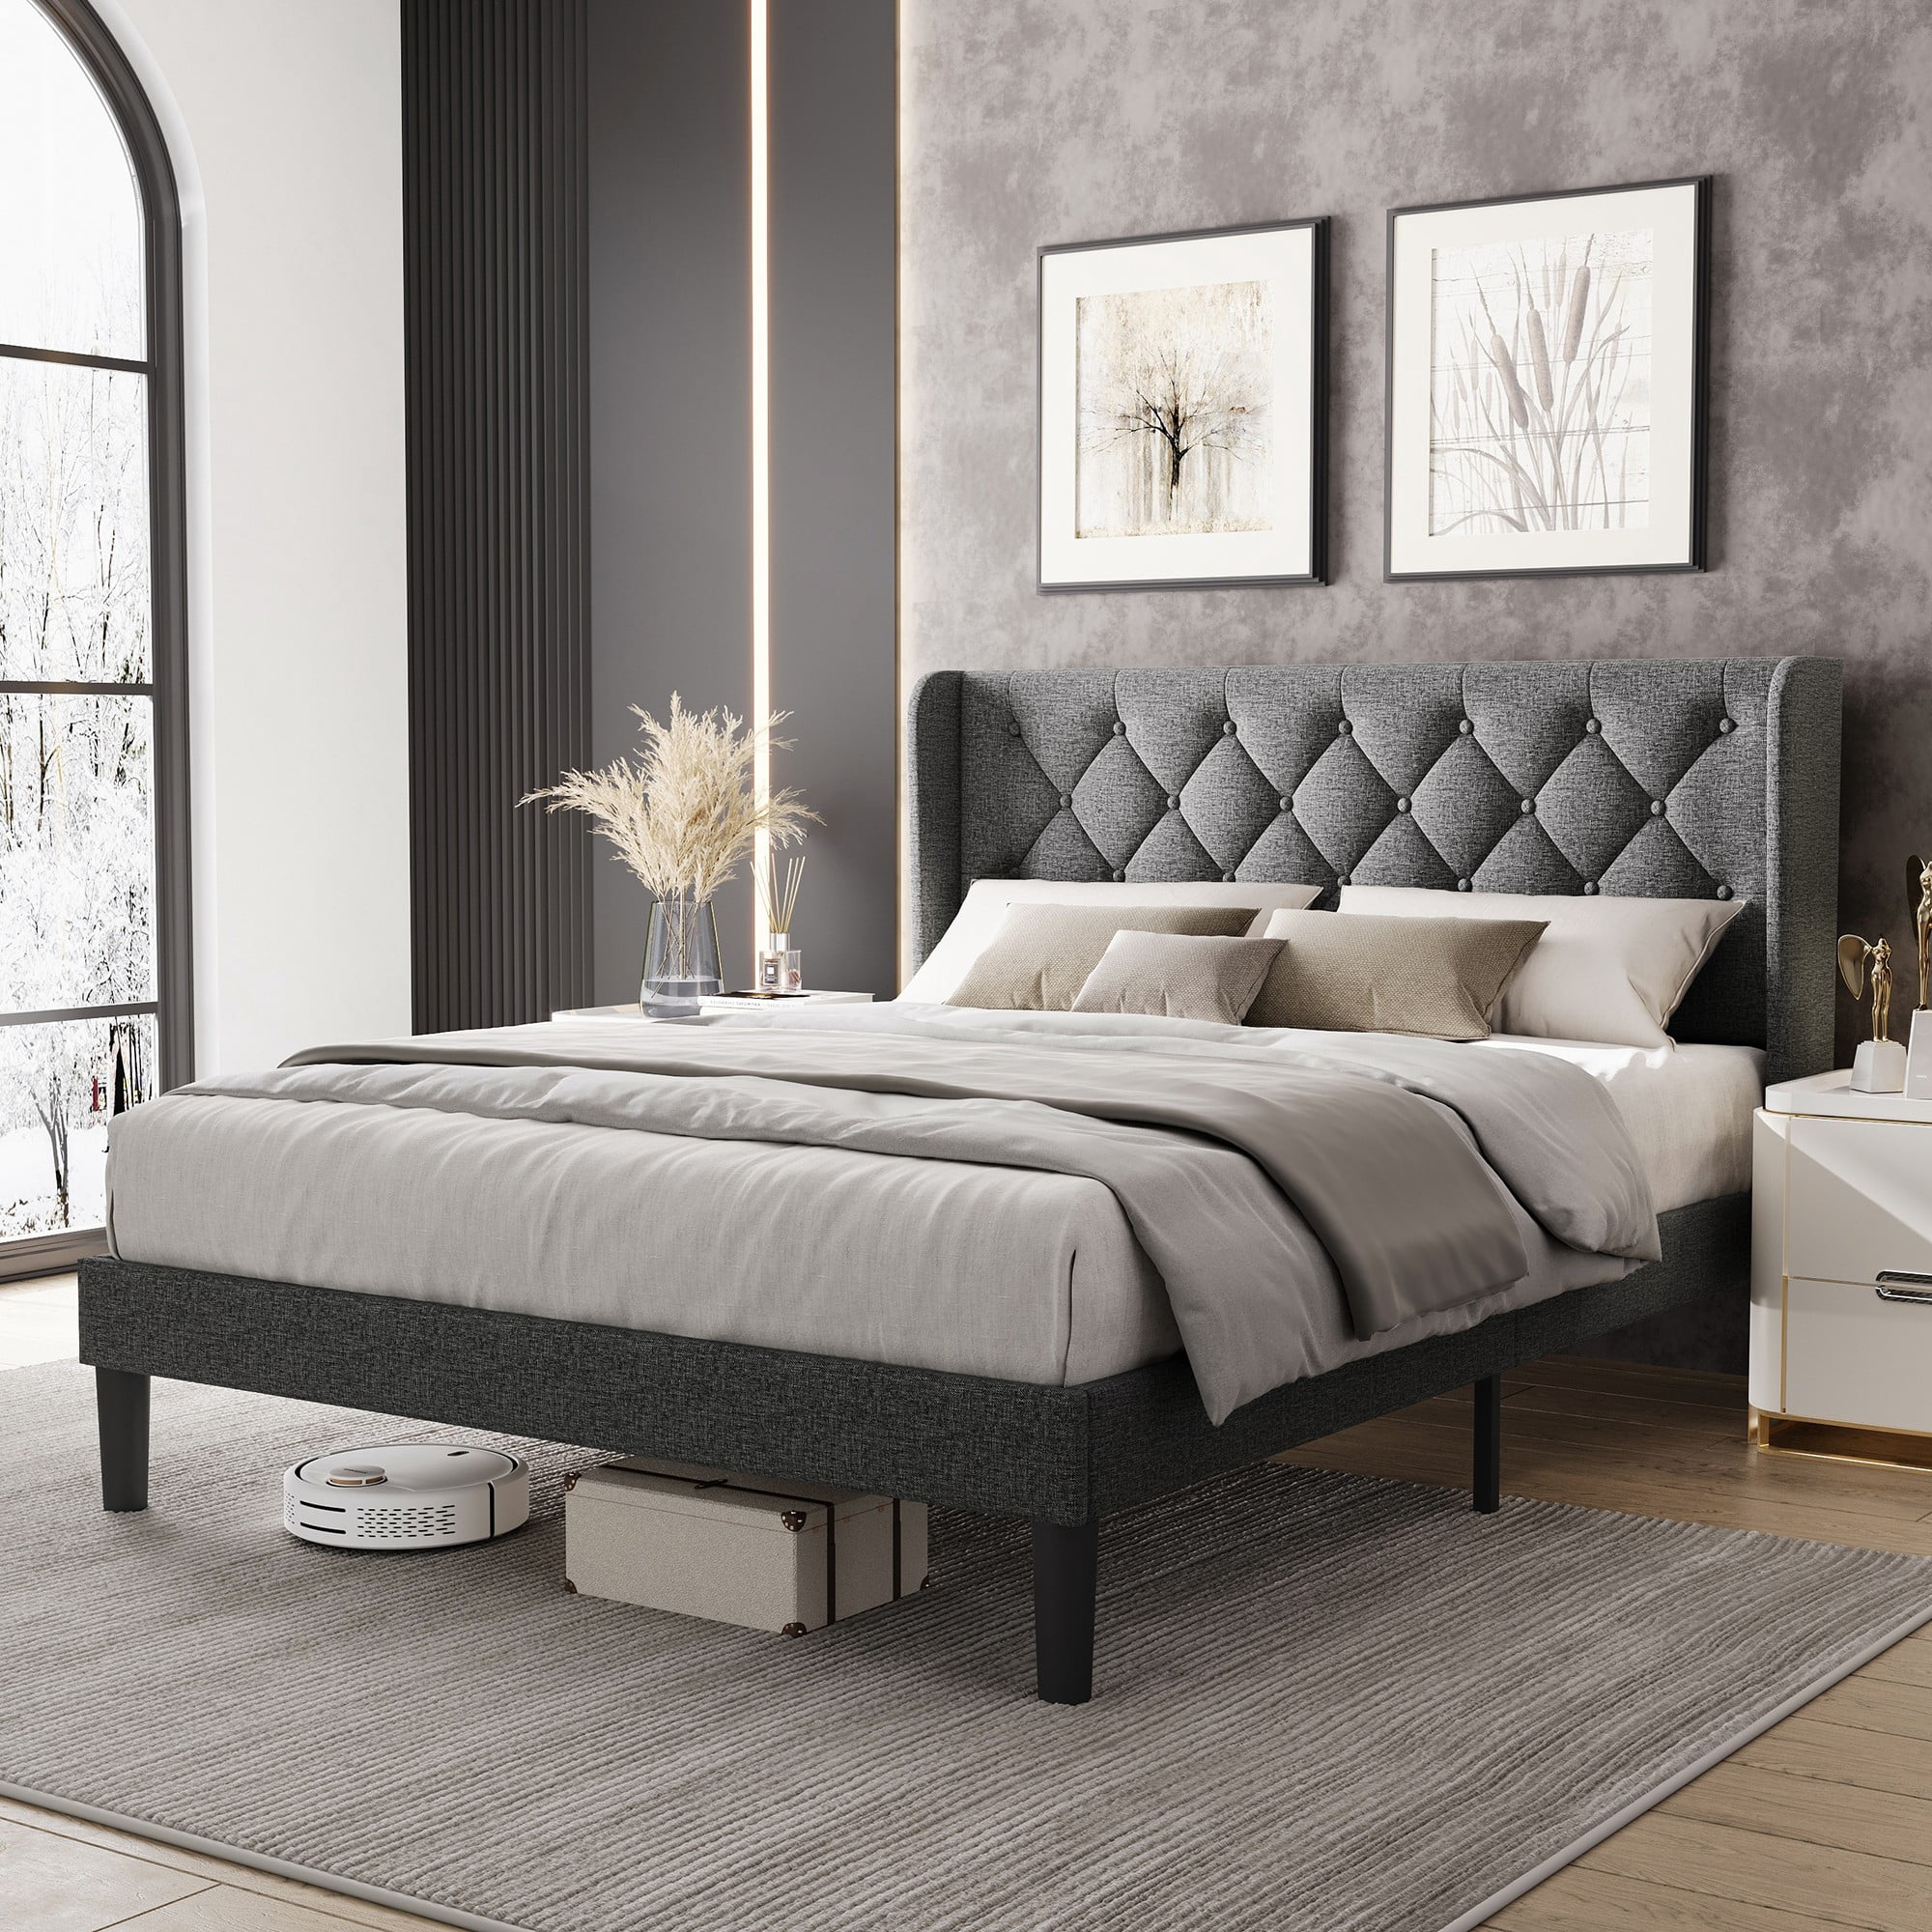 LINSY LIVING Full Size Platform Bed Frame with Linen Upholstered Headboard,NO Box Spring Needed,Dark Grey